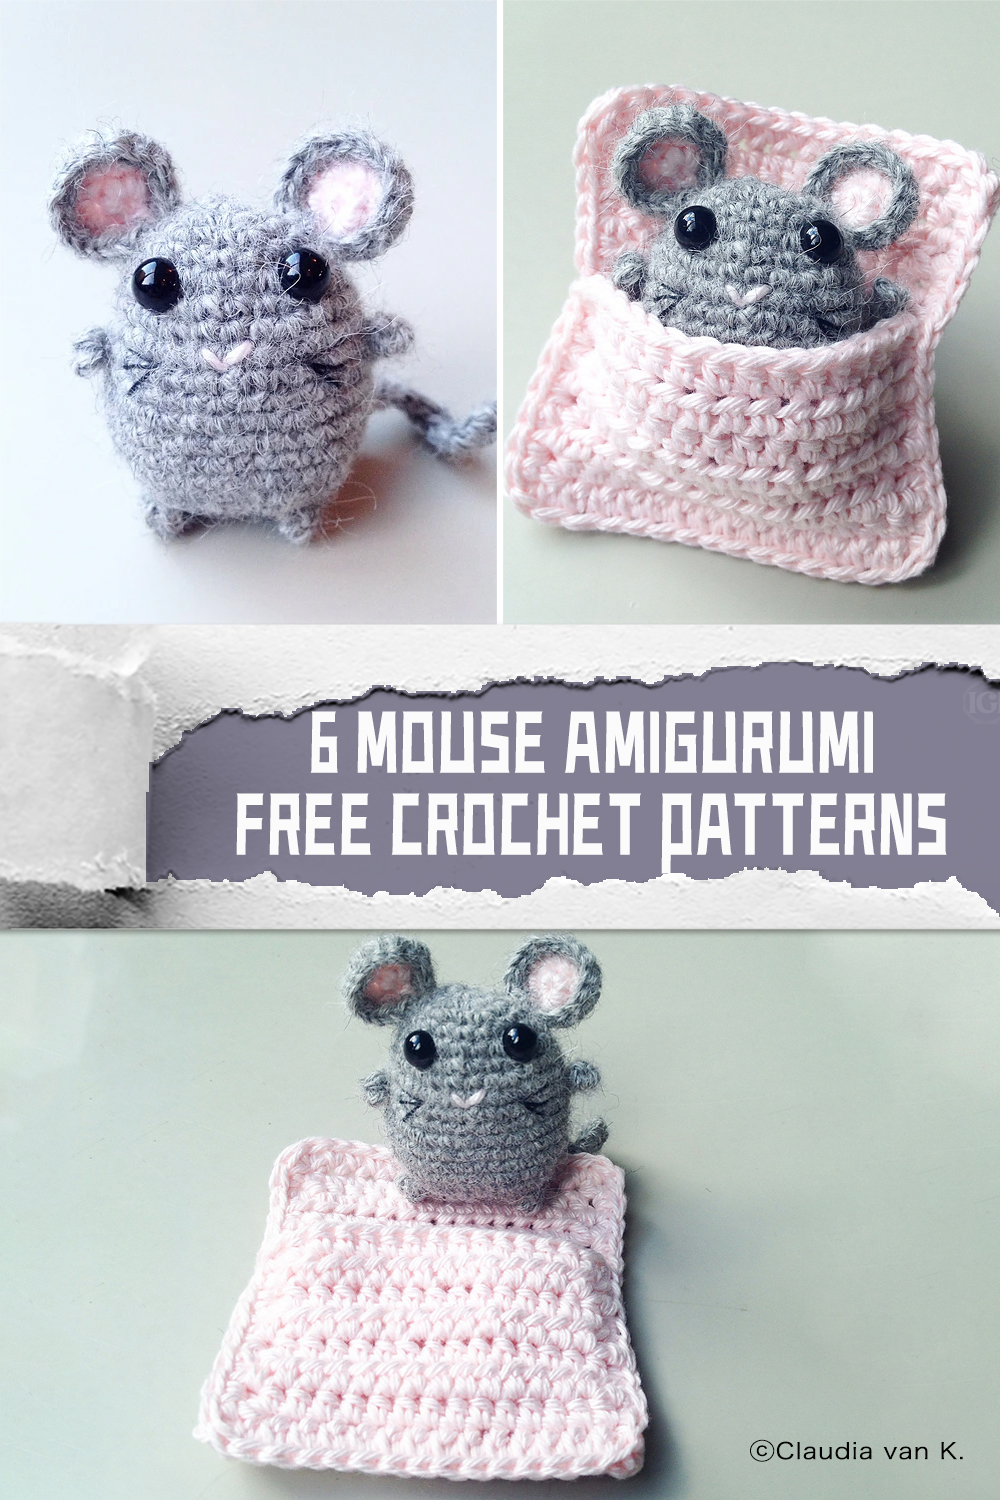 6 FREE Mouse Amigurumi Crochet Patterns